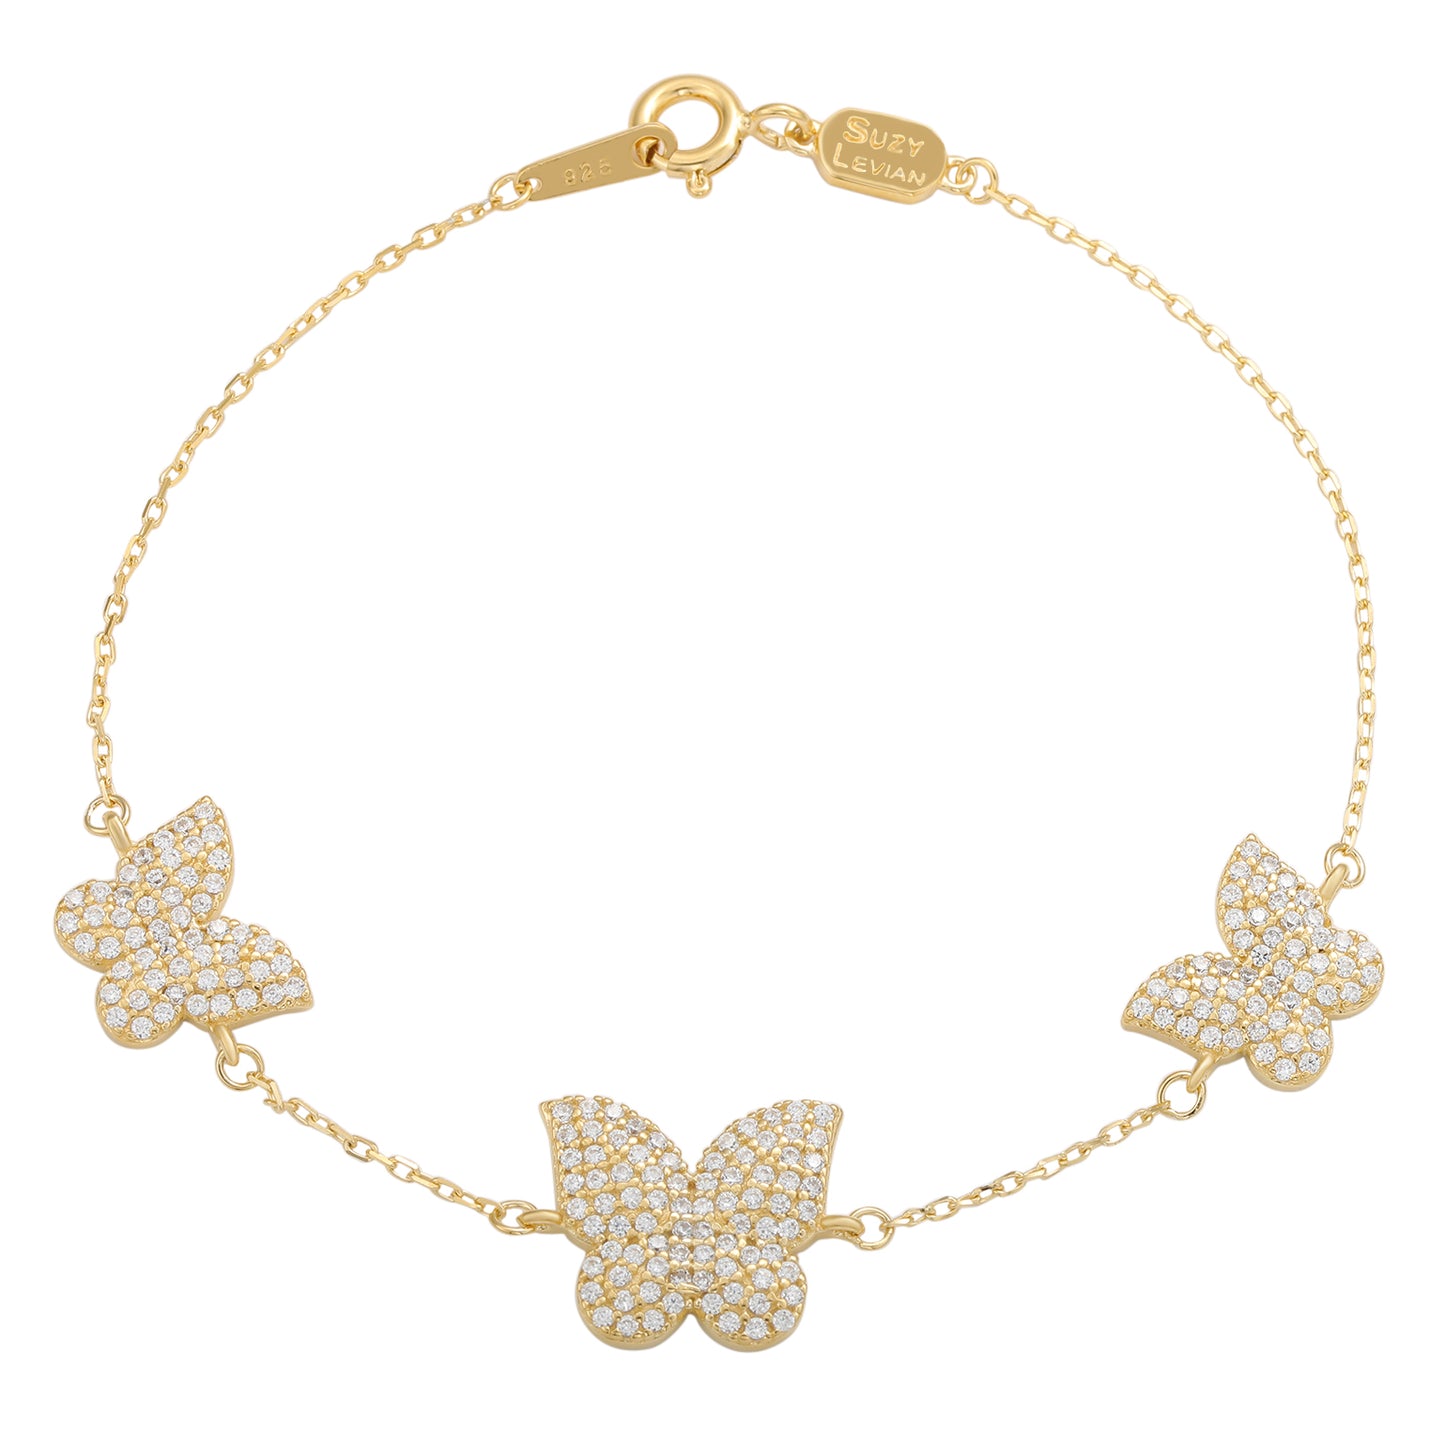 Suzy Levian Yellow Sterling Silver Cubic Zirconia Butterfly Bracelet